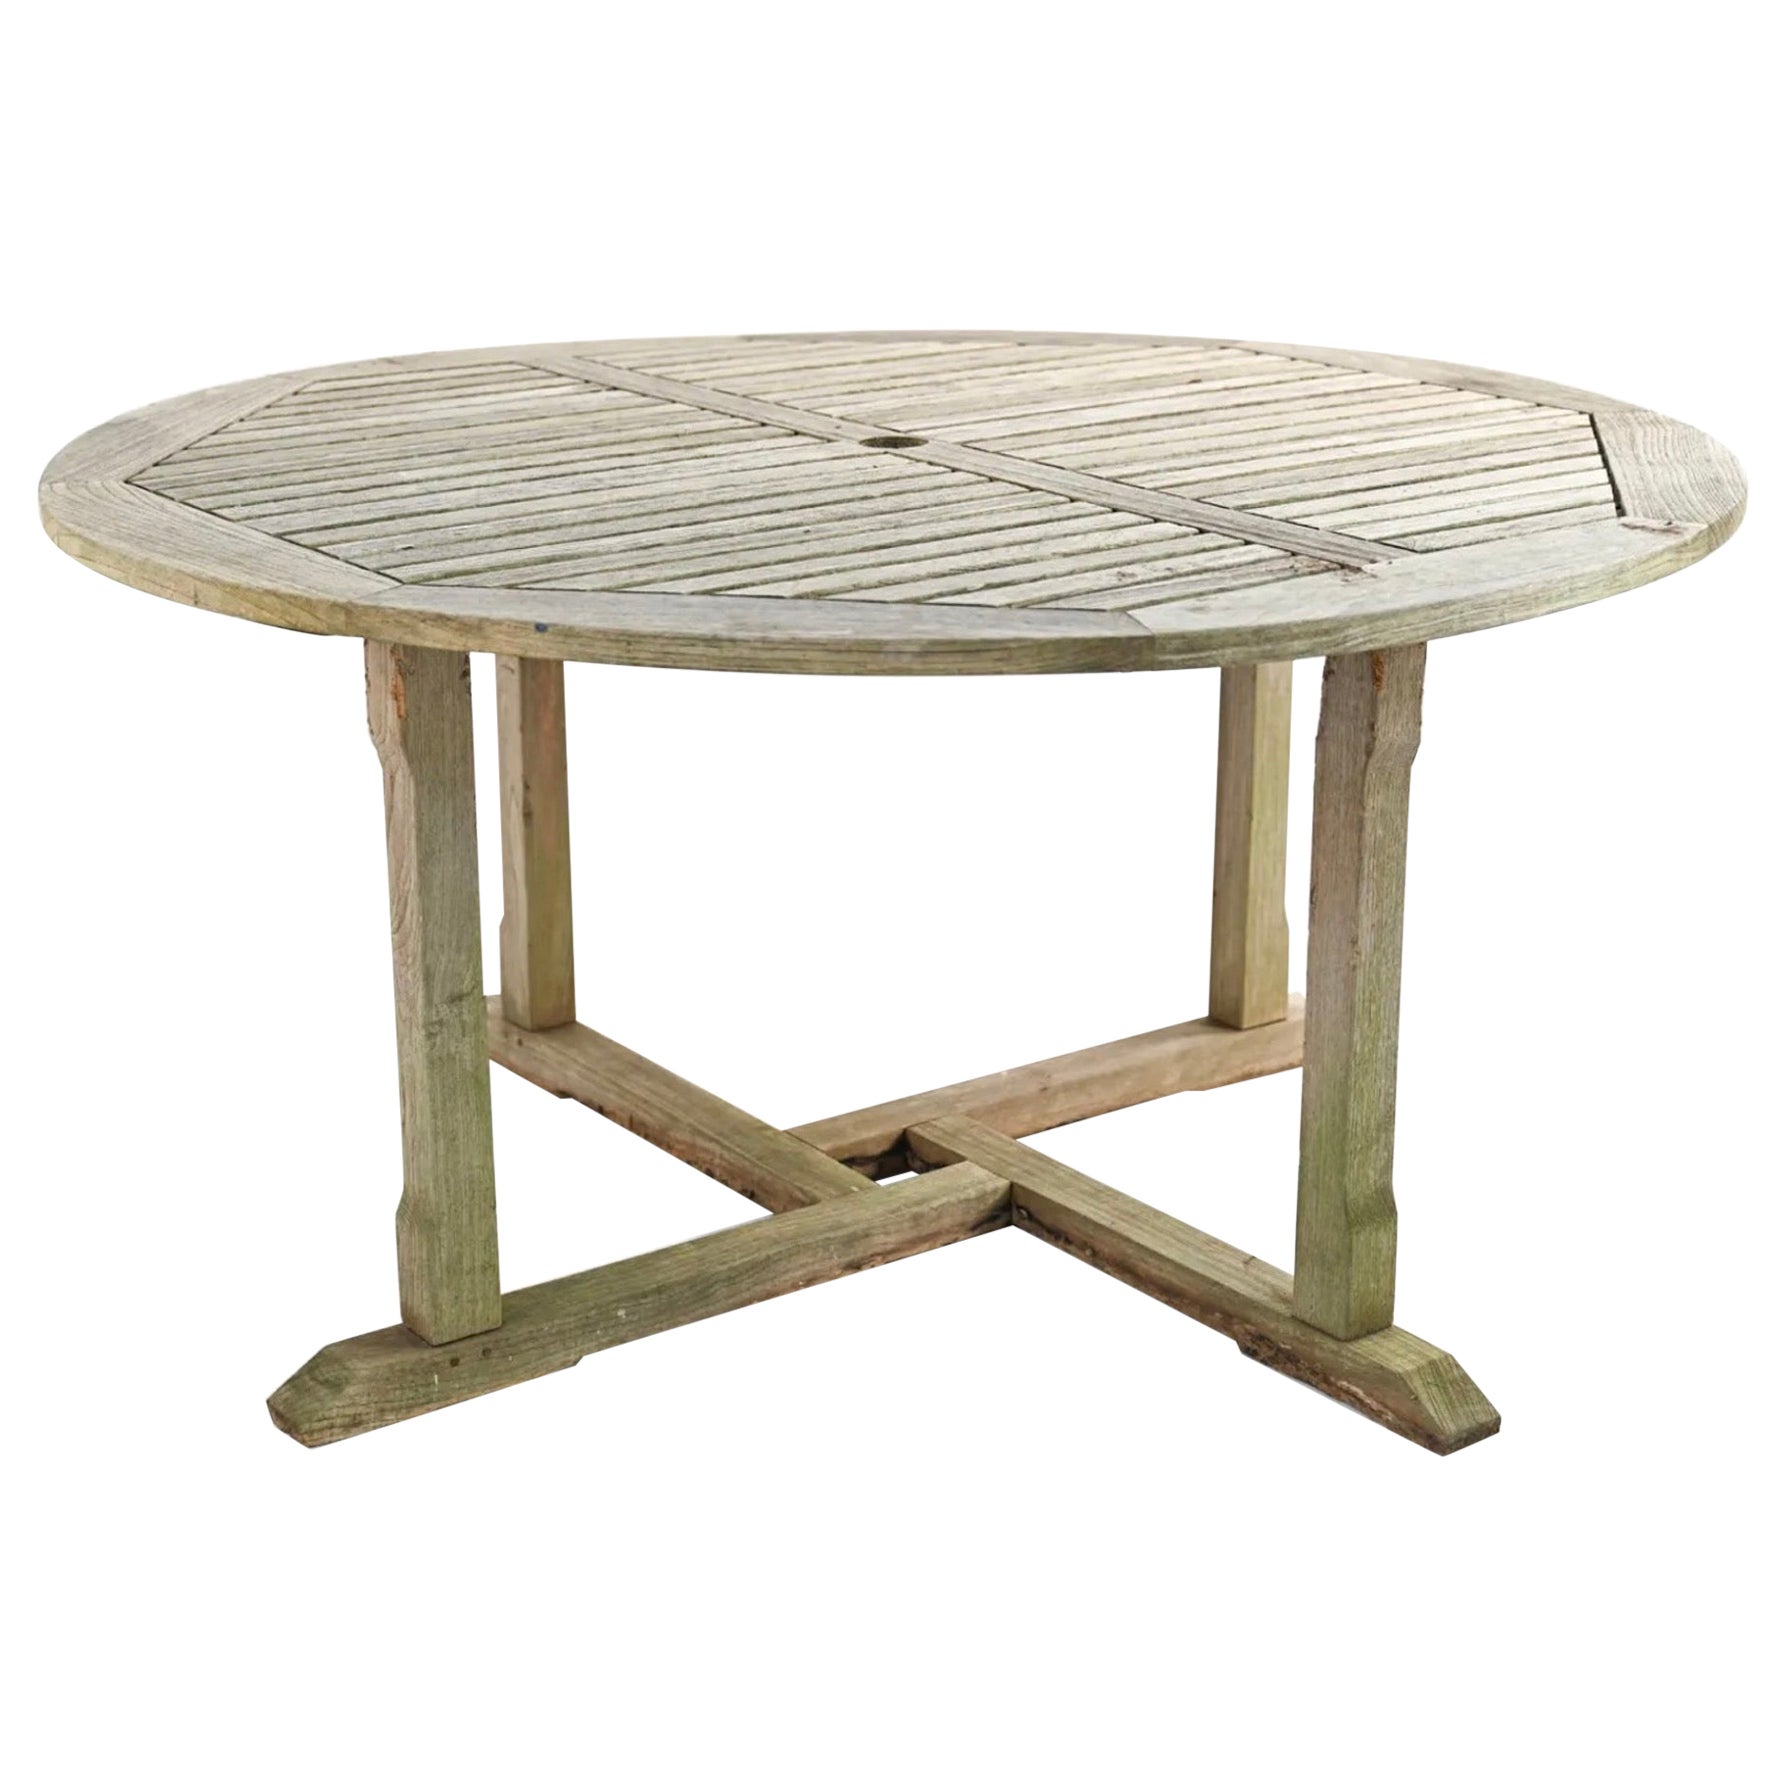 Vintage Round Teak Wood Outdoor Garden Dining Table For Sale